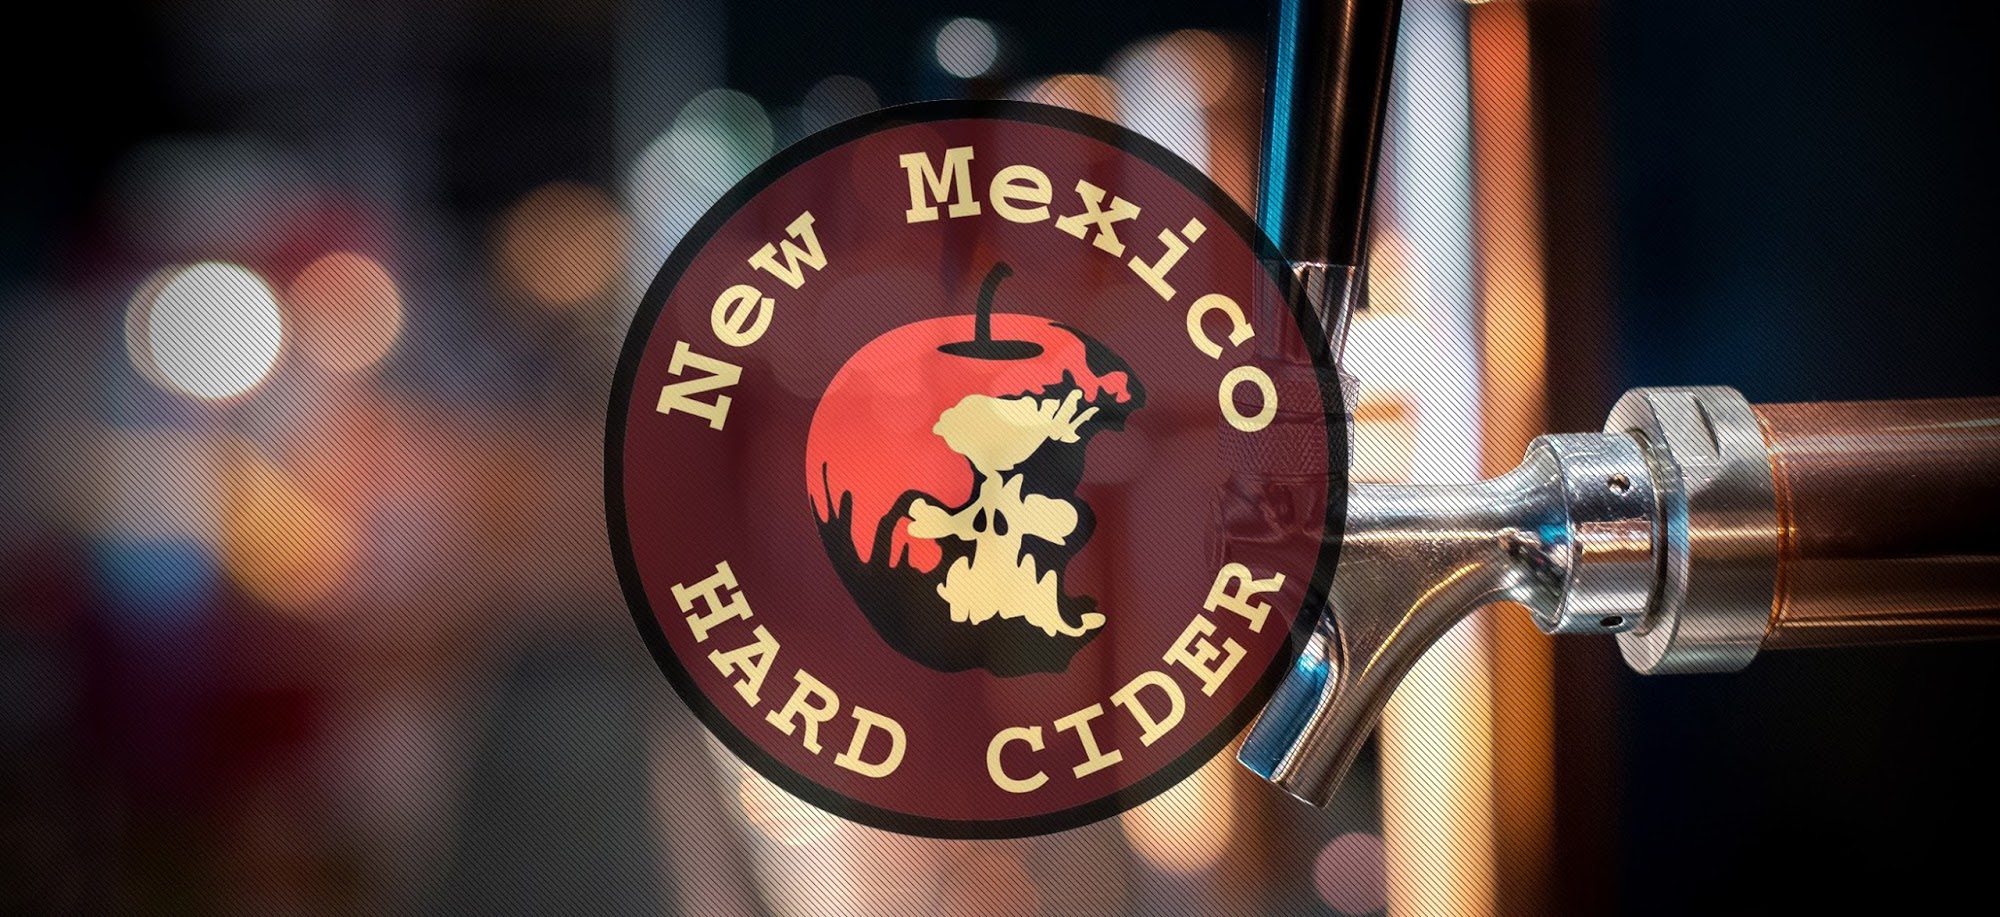 New Mexico Hard Cider Taproom